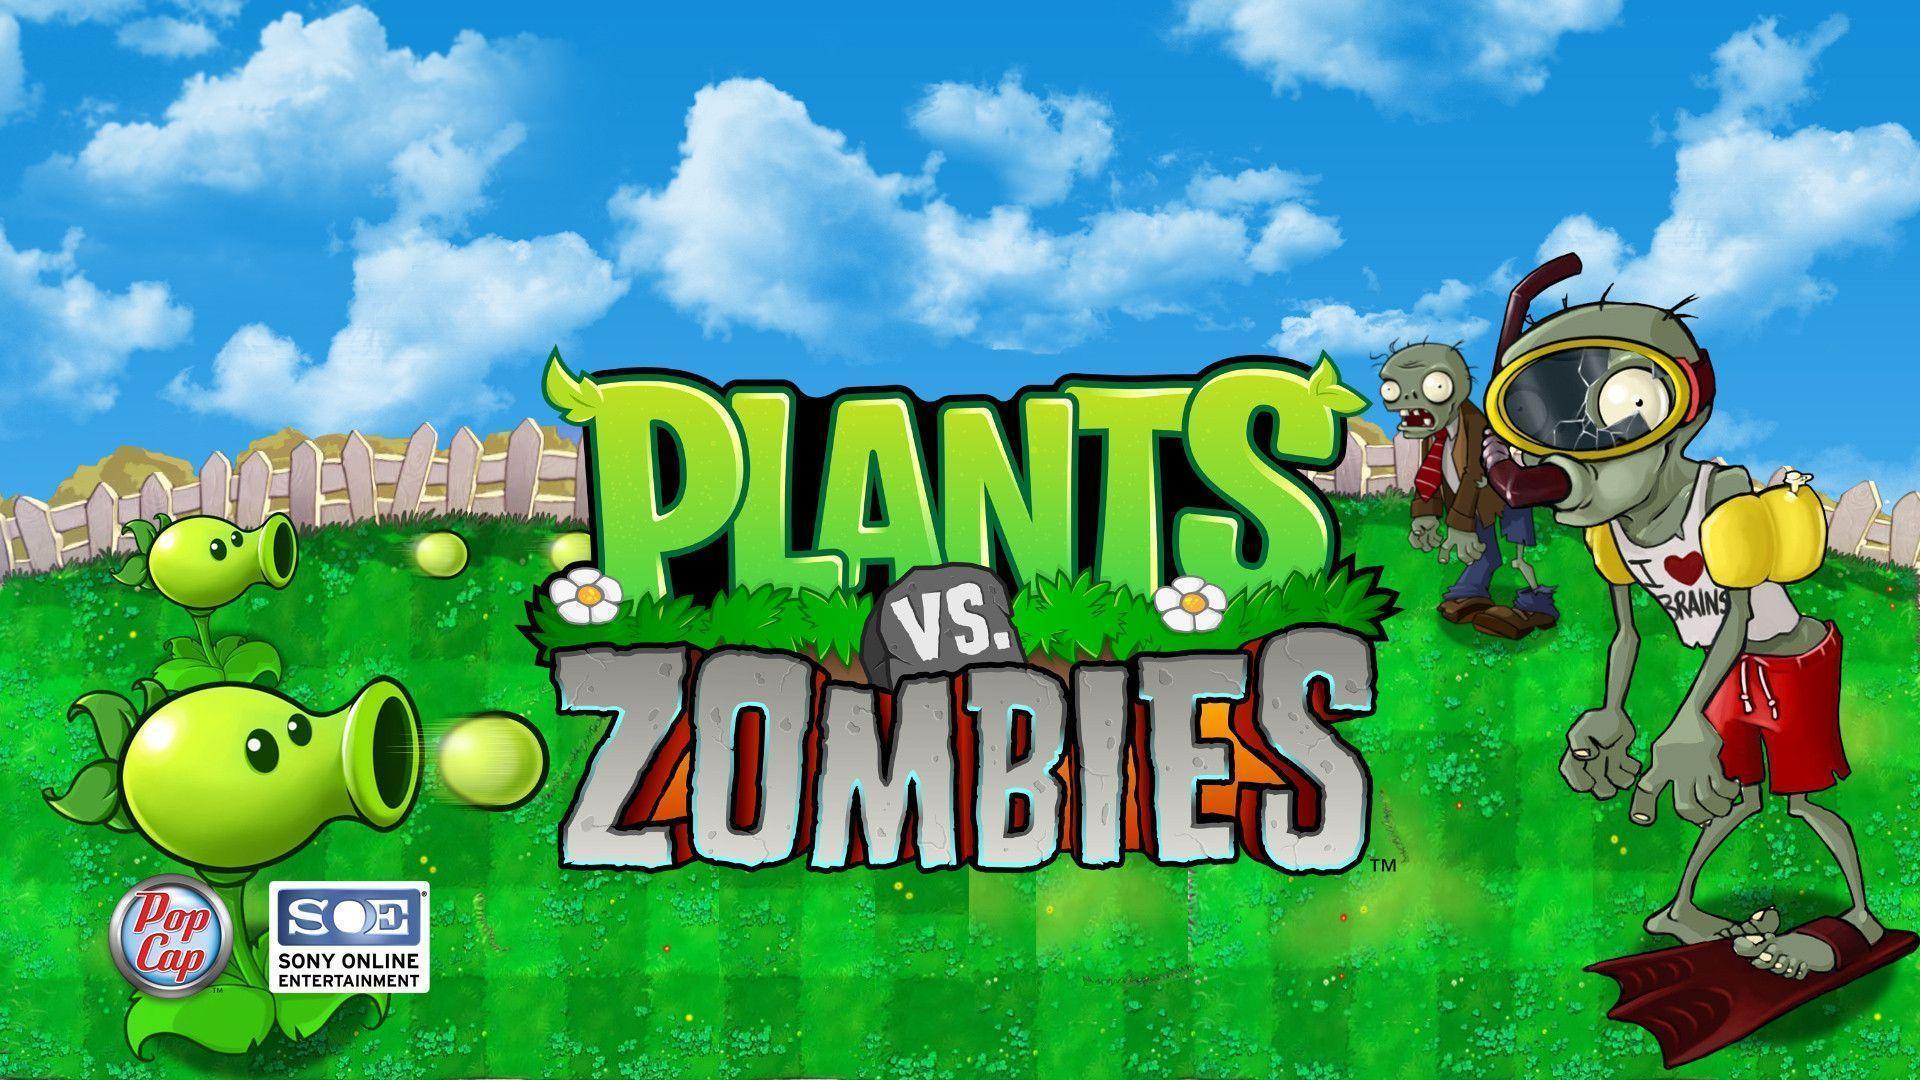 Of The Best Plants vs Zombies Wallpaper